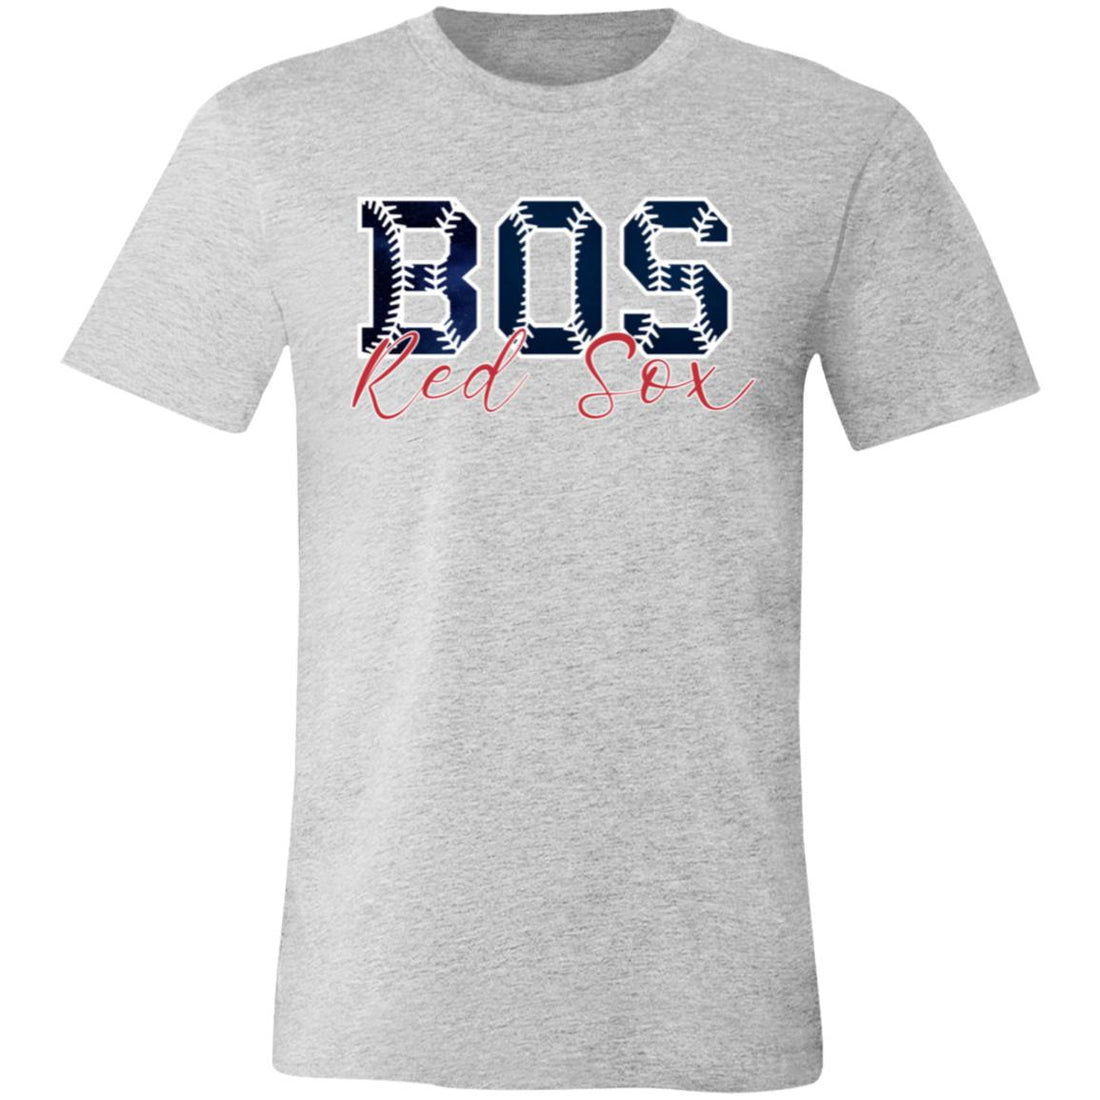 BOS Red Sox T-Shirt - T-Shirts - Positively Sassy - BOS Red Sox T-Shirt